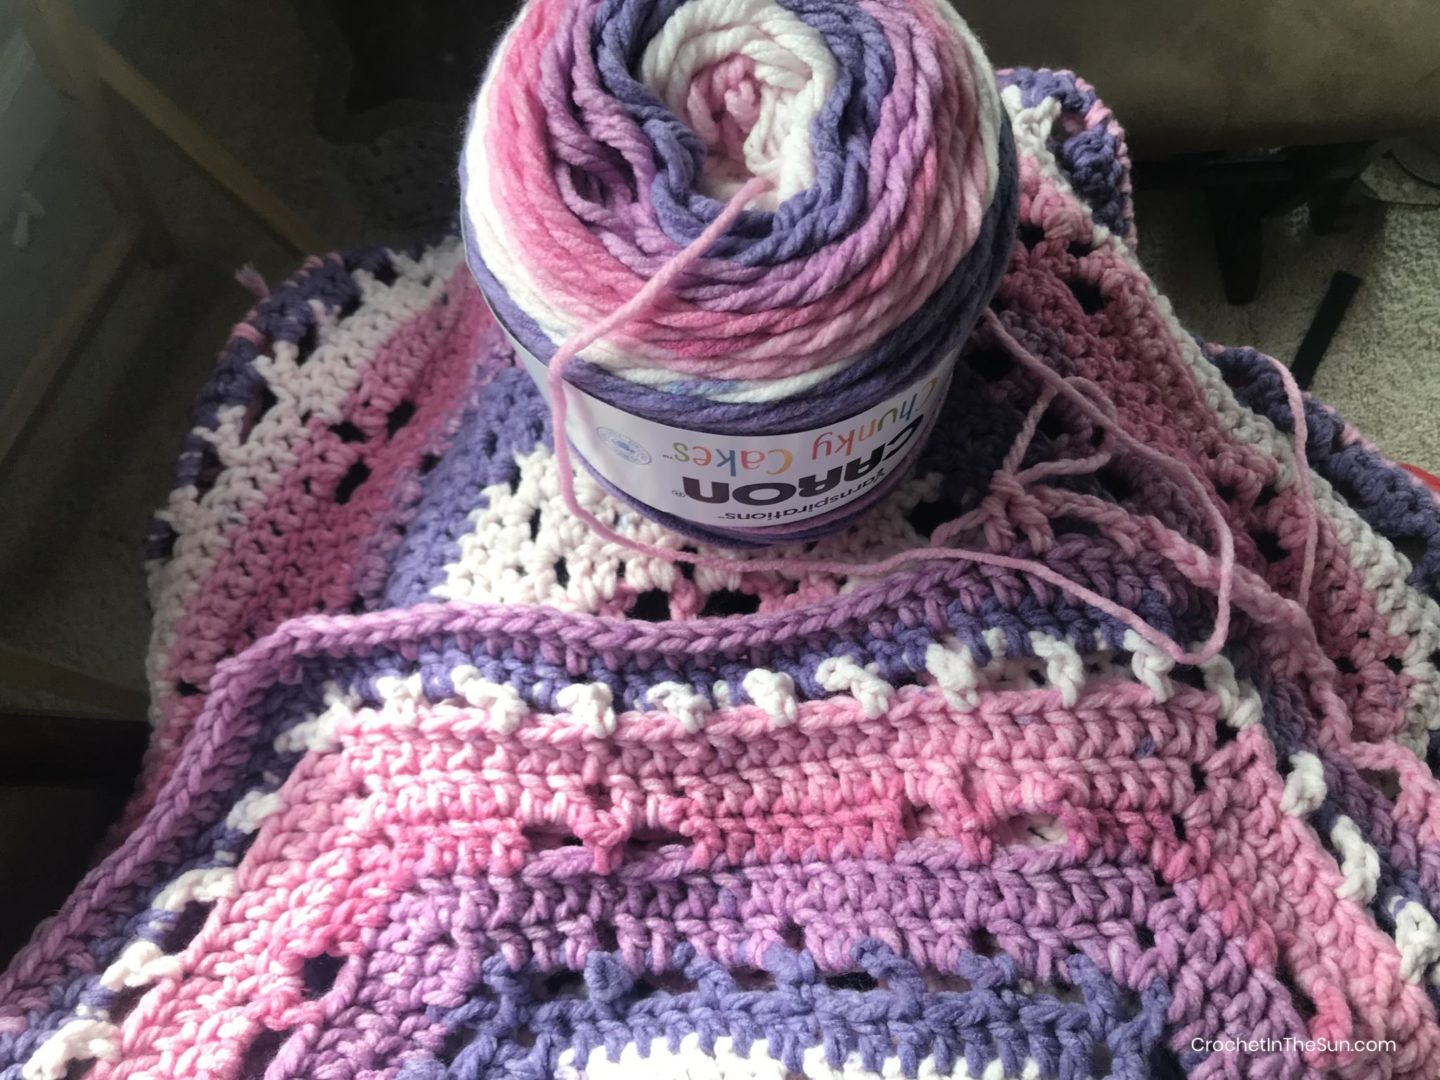 Chunky Cakes Yarn by Caron - Multicolor Yarn for Knitting, Crochet